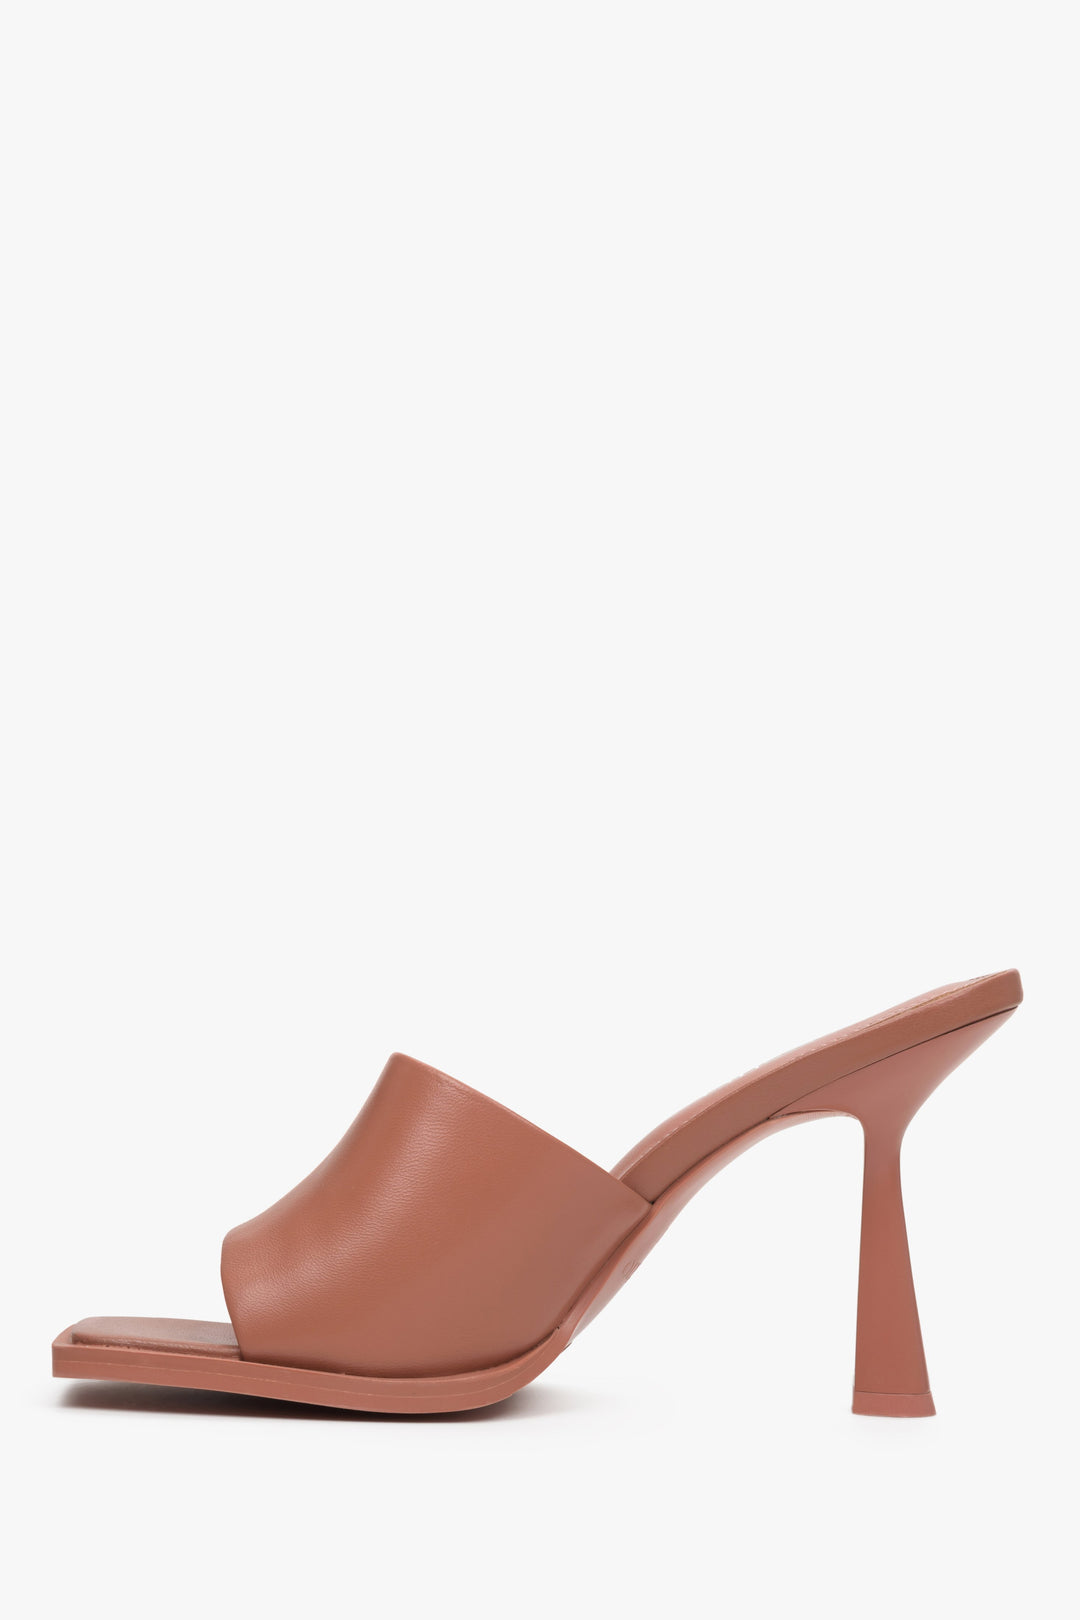 Brown natural leather Estro stiletto mules - shoes profile.